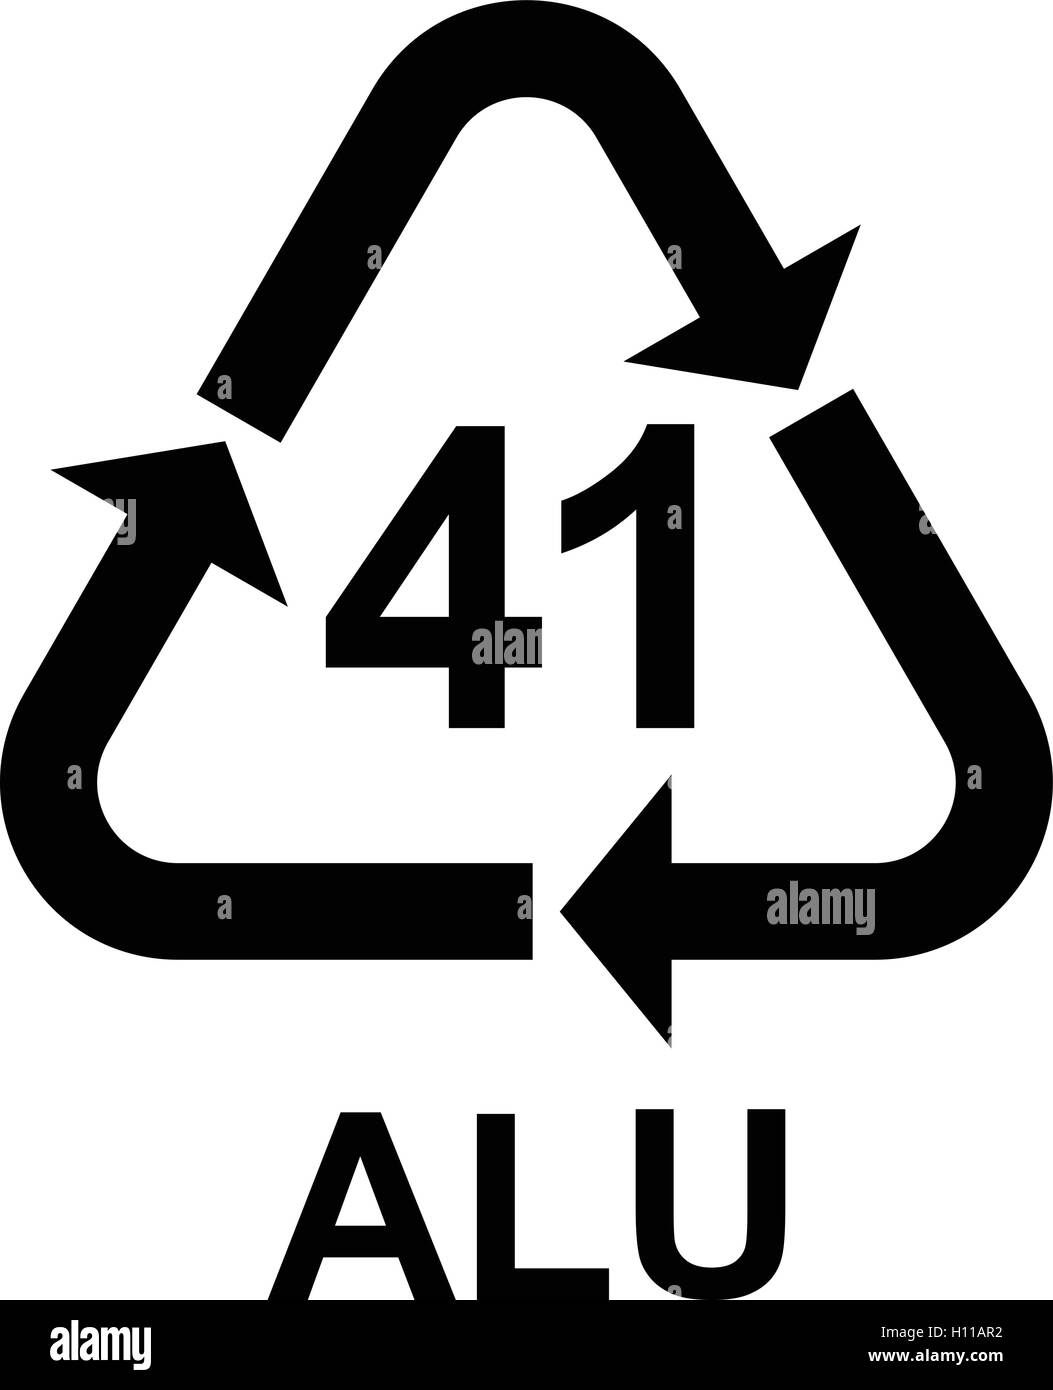 Symbole de recyclage de l'aluminium alu 41, code de recyclage de métaux alu 41, vector illustration. Illustration de Vecteur